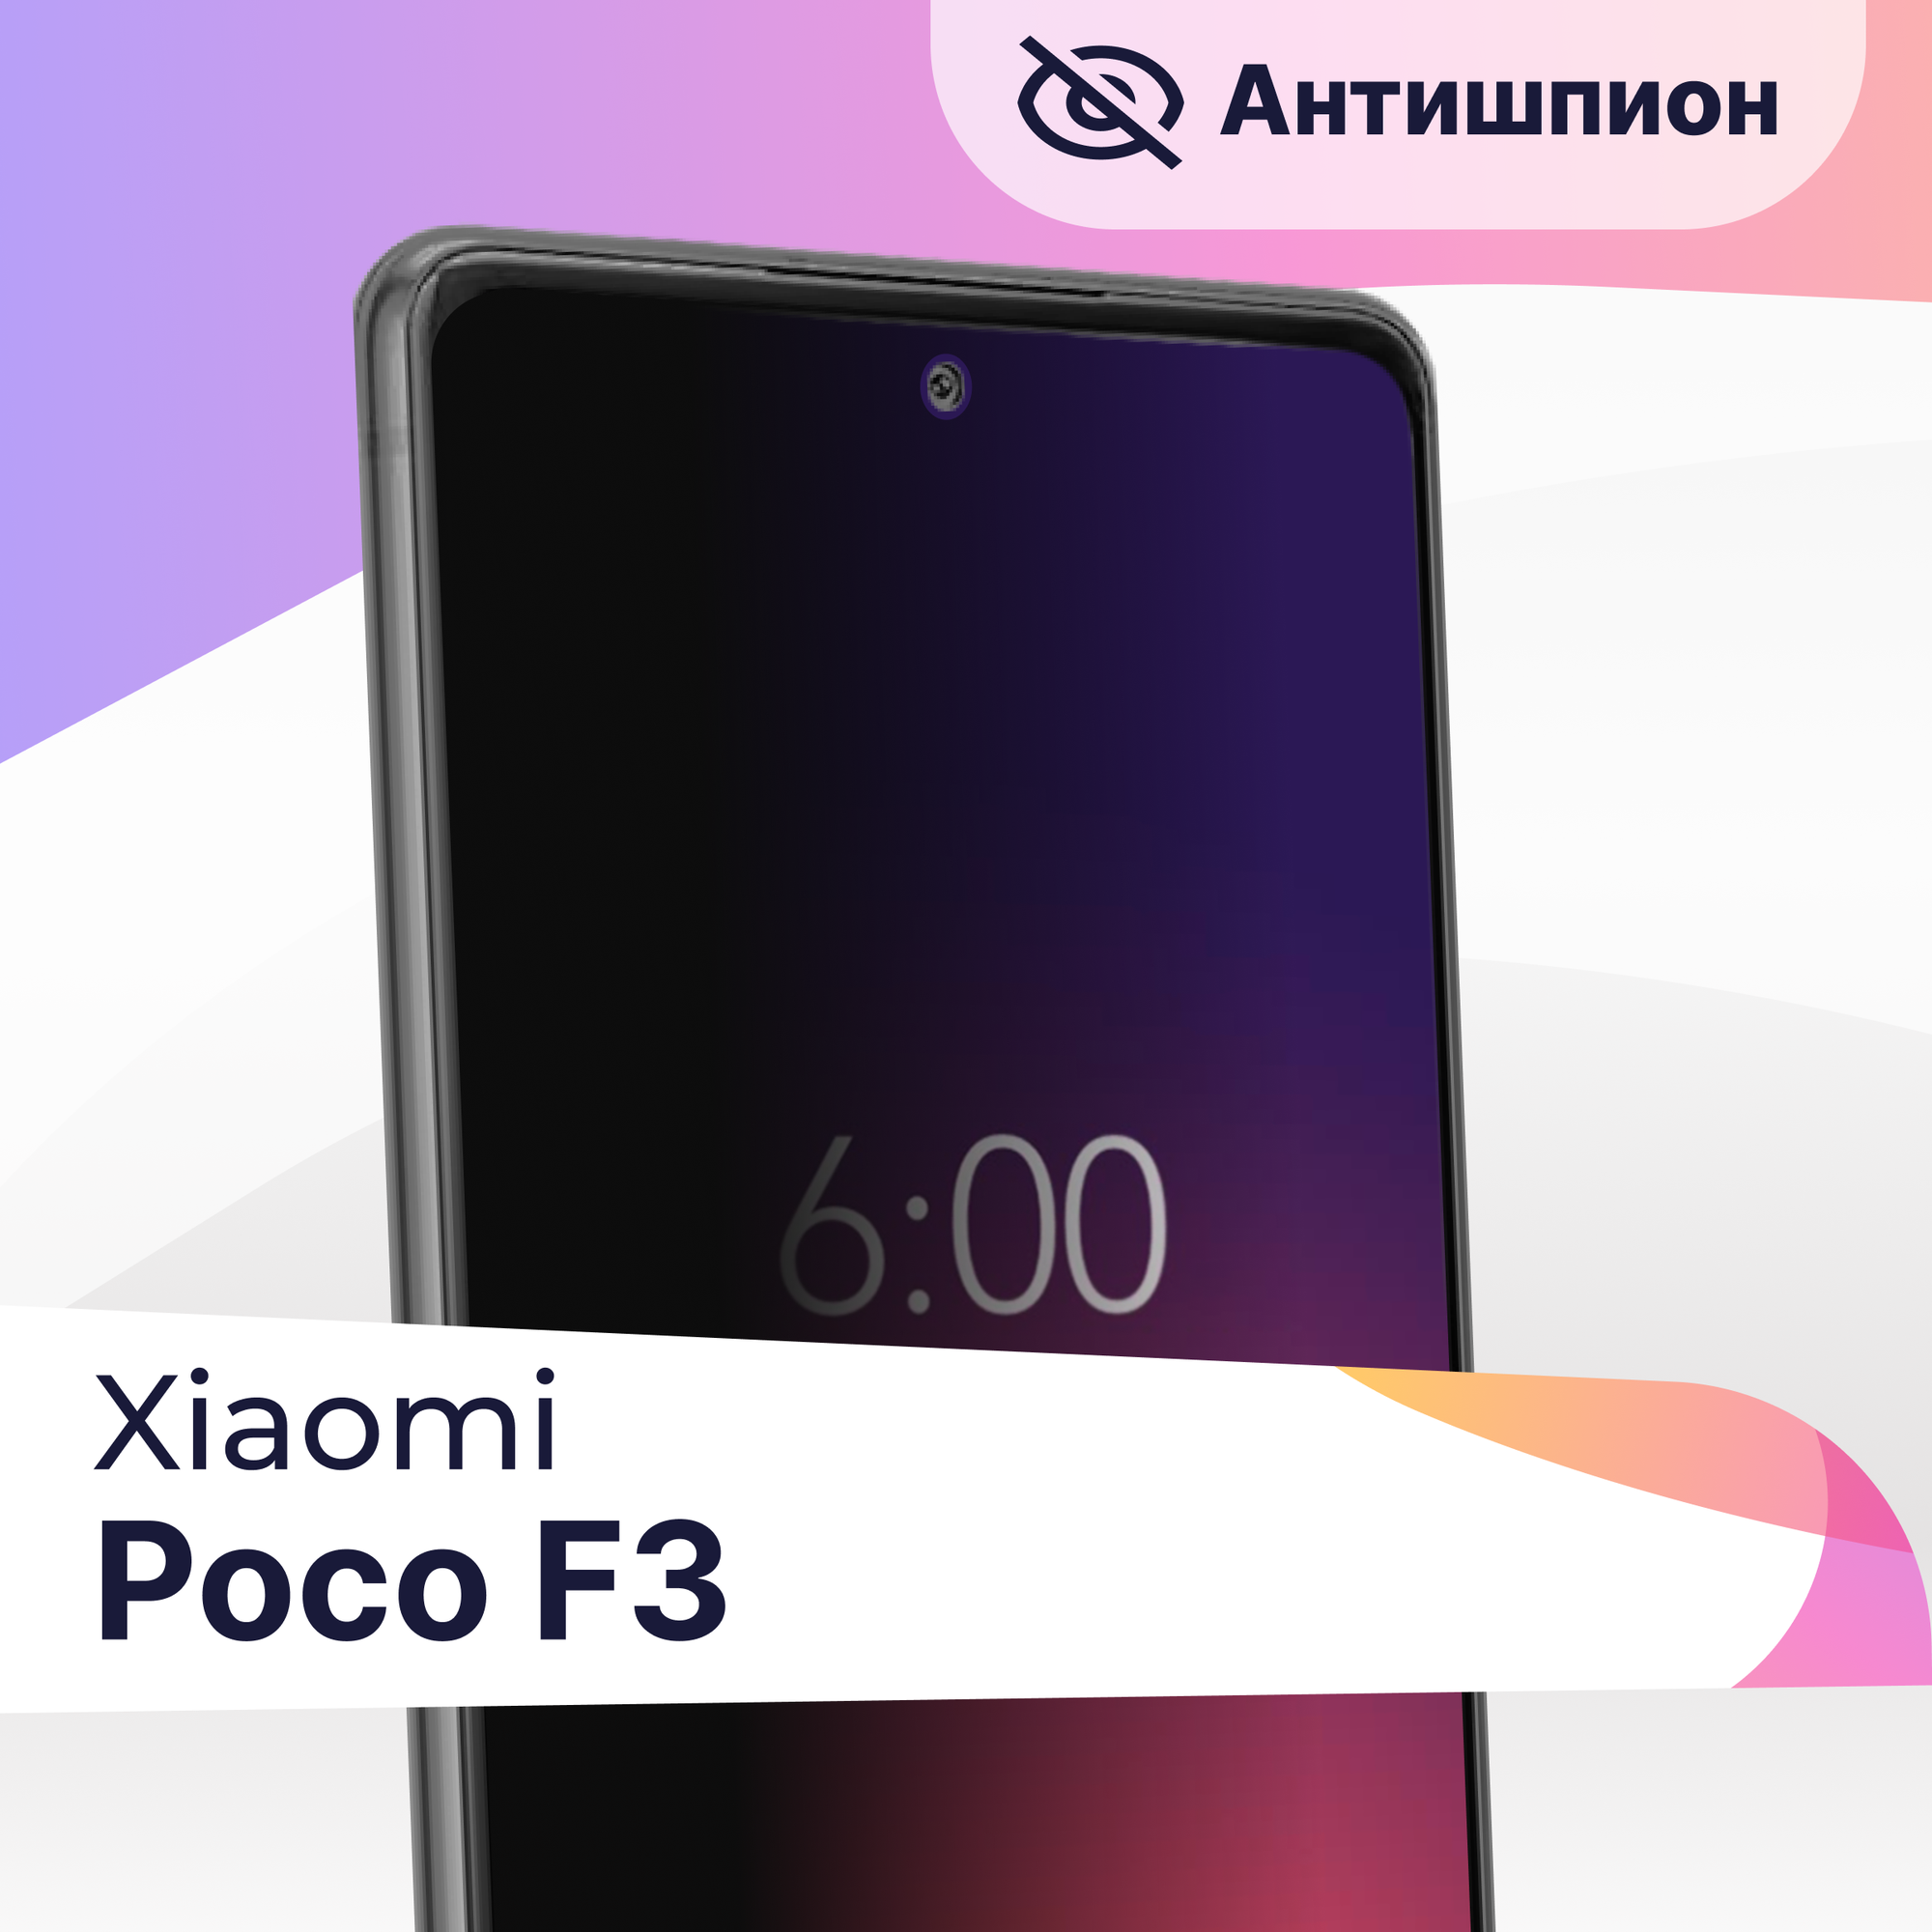 Защитное стекло Антишпион на телефон Xiaomi Poco F3 / Premium 5D стекло для смартфона Сяоми Поко Ф3 с черной рамкой / Противоударное стекло